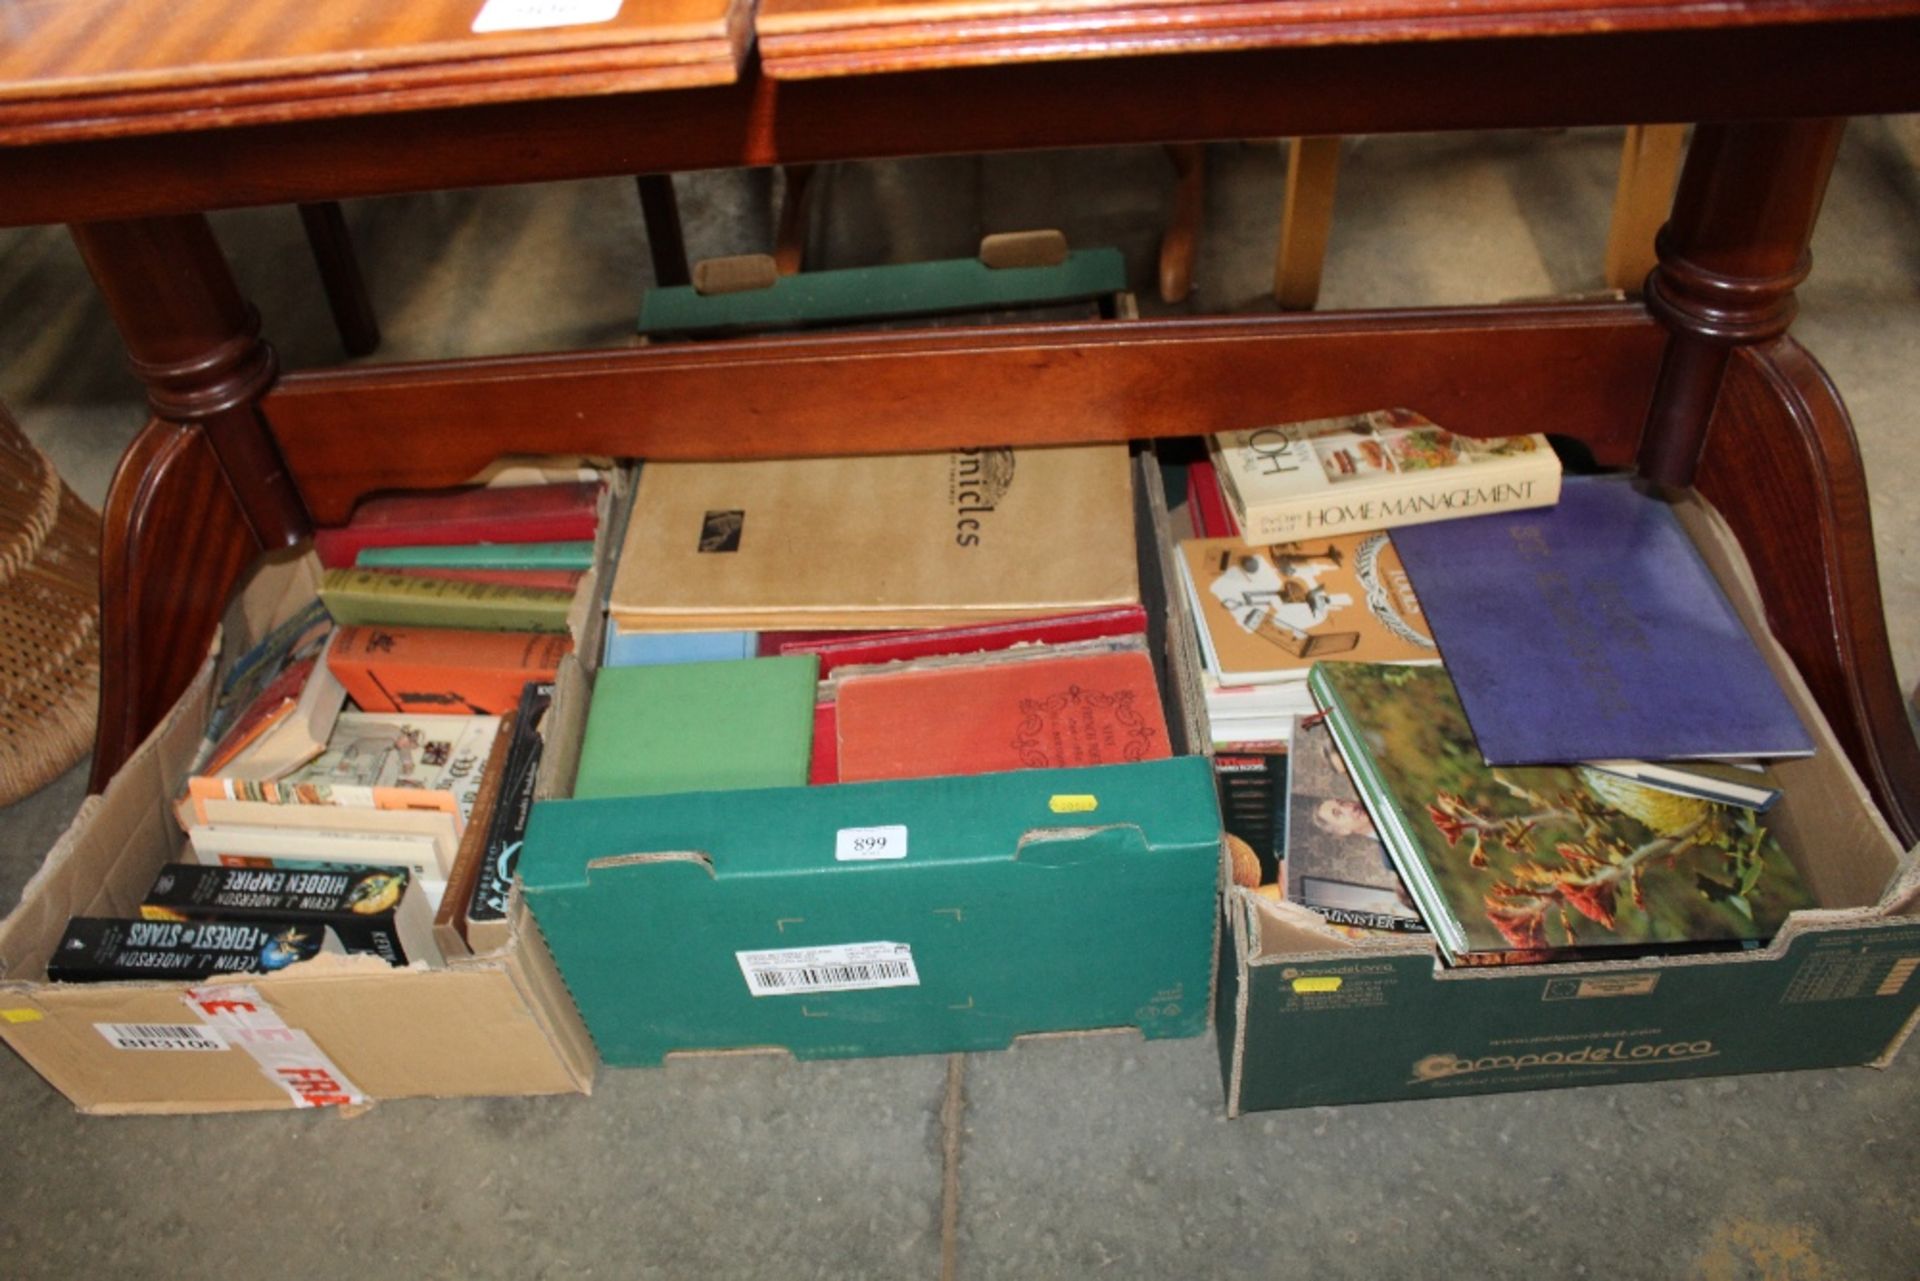 Three boxes of various miscellaneous books